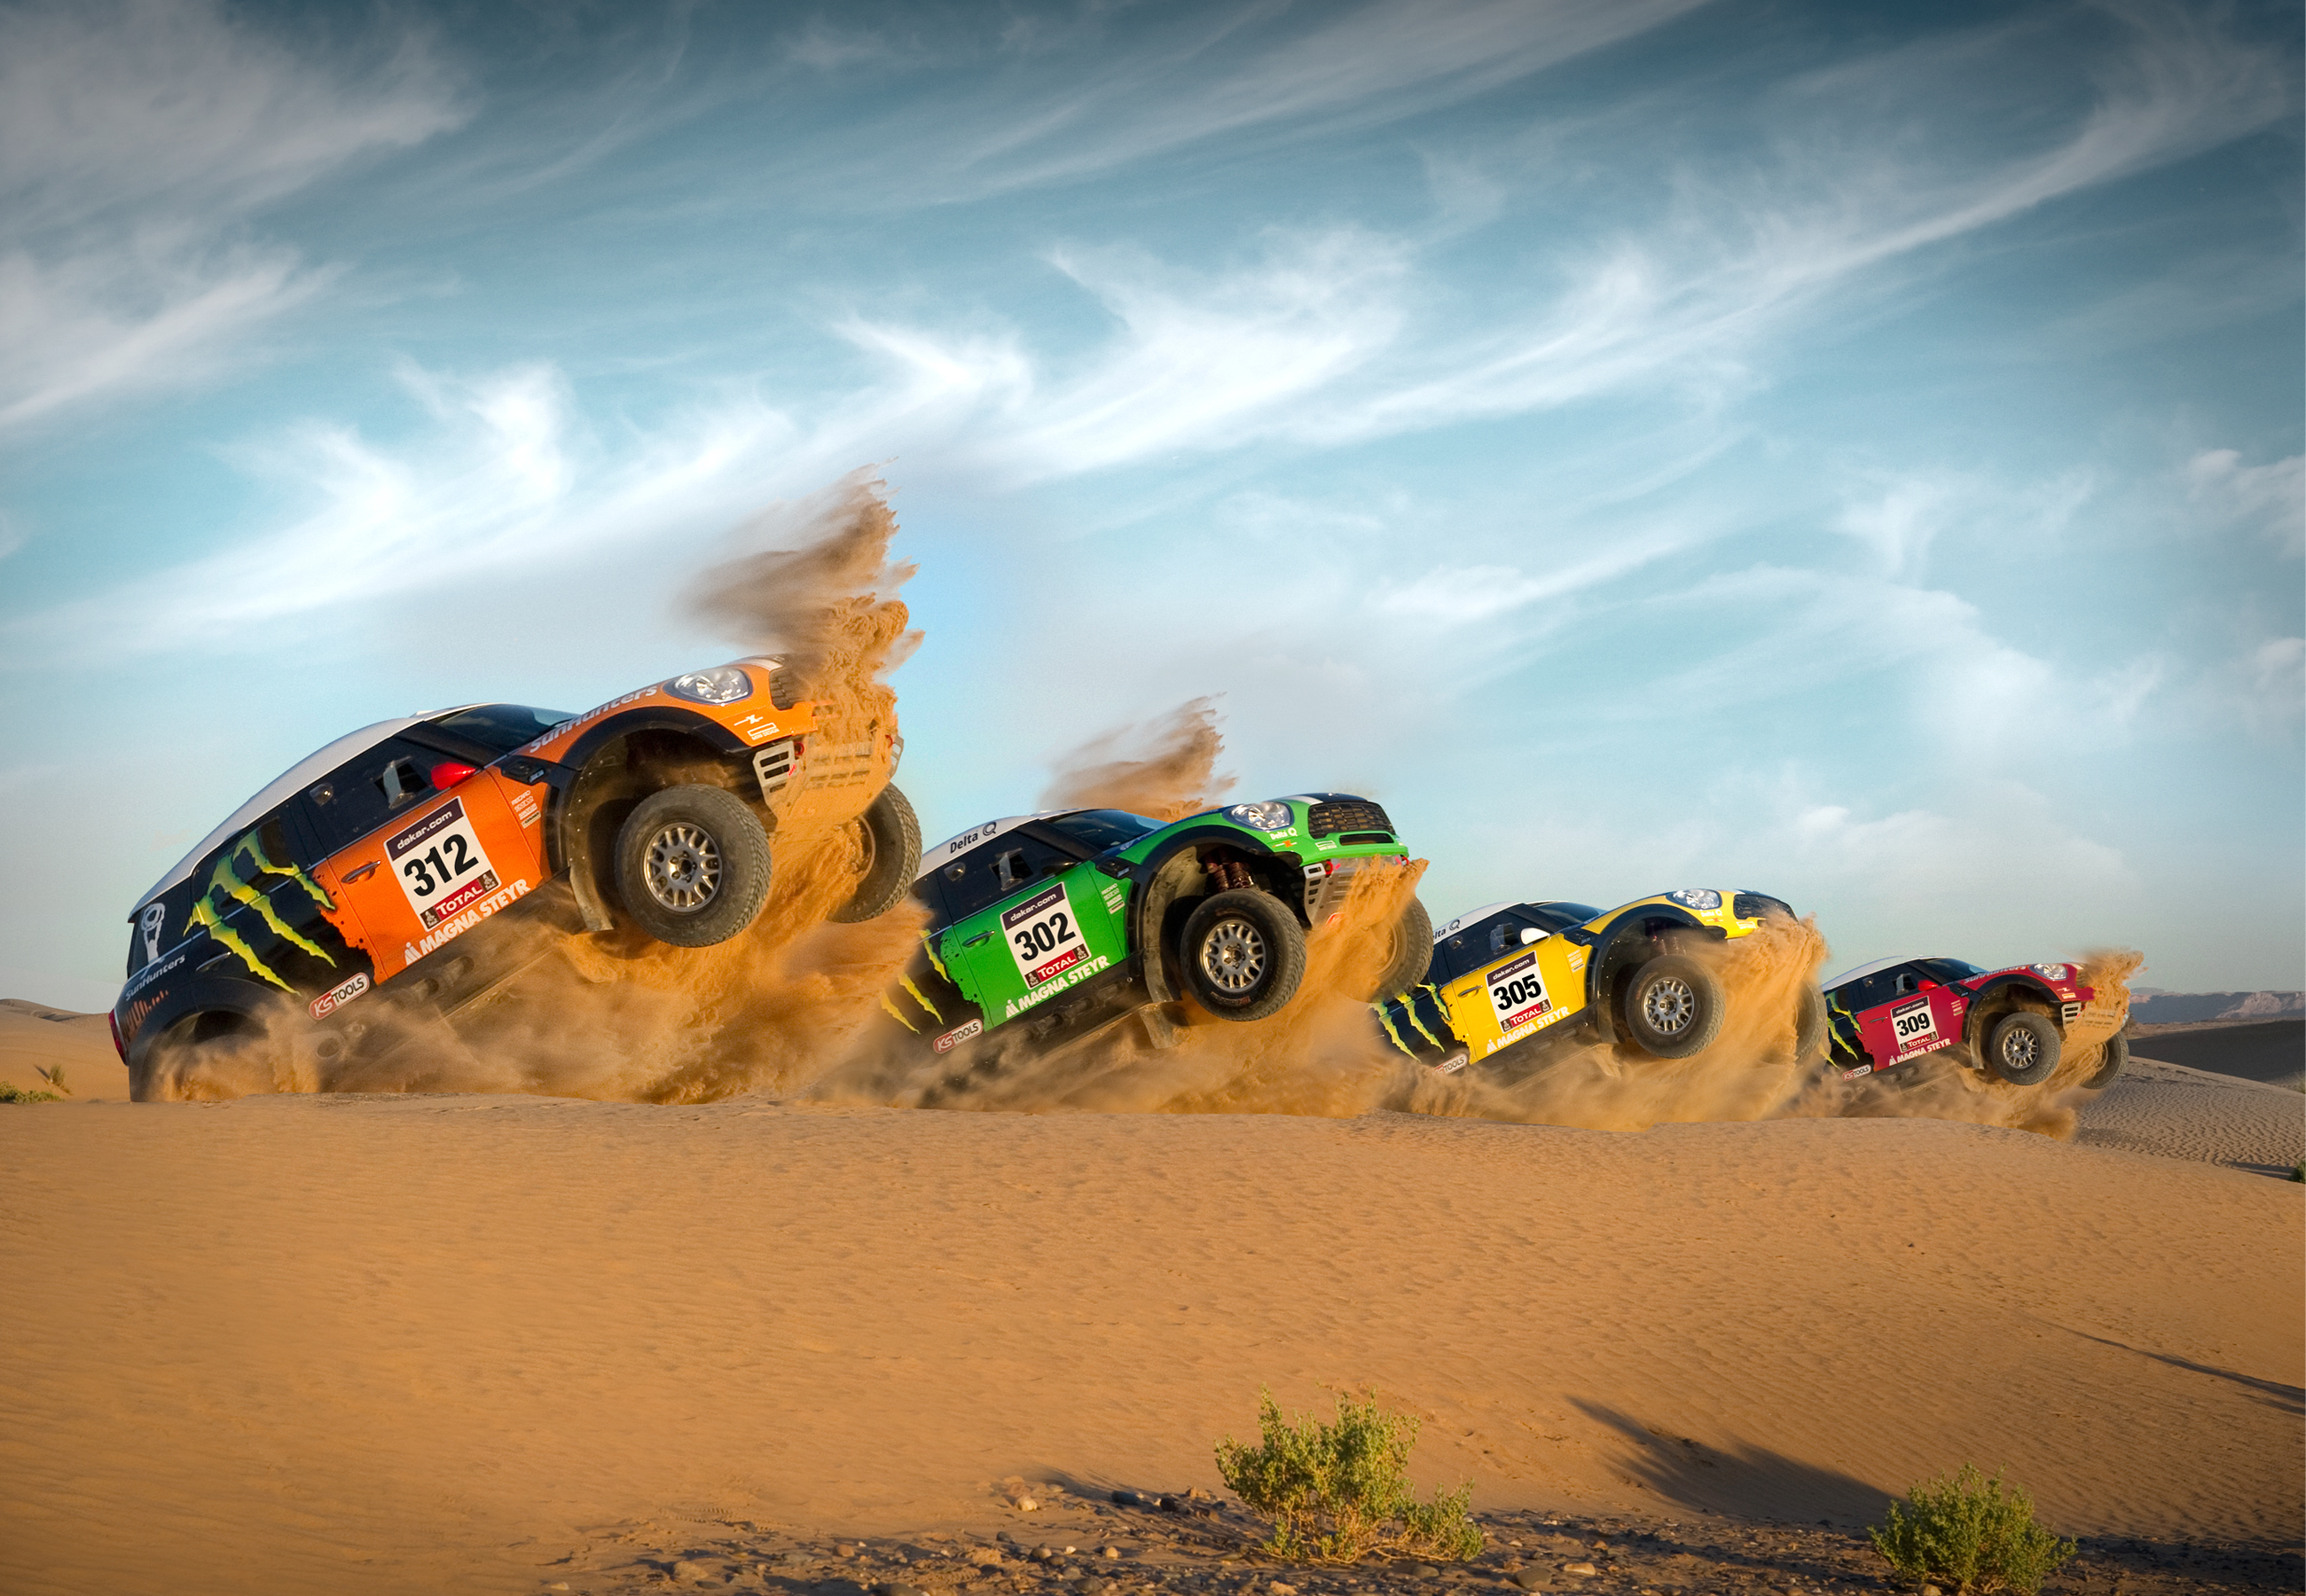 Wallpaper mini cooper sand rally jumping racing car vehicle x